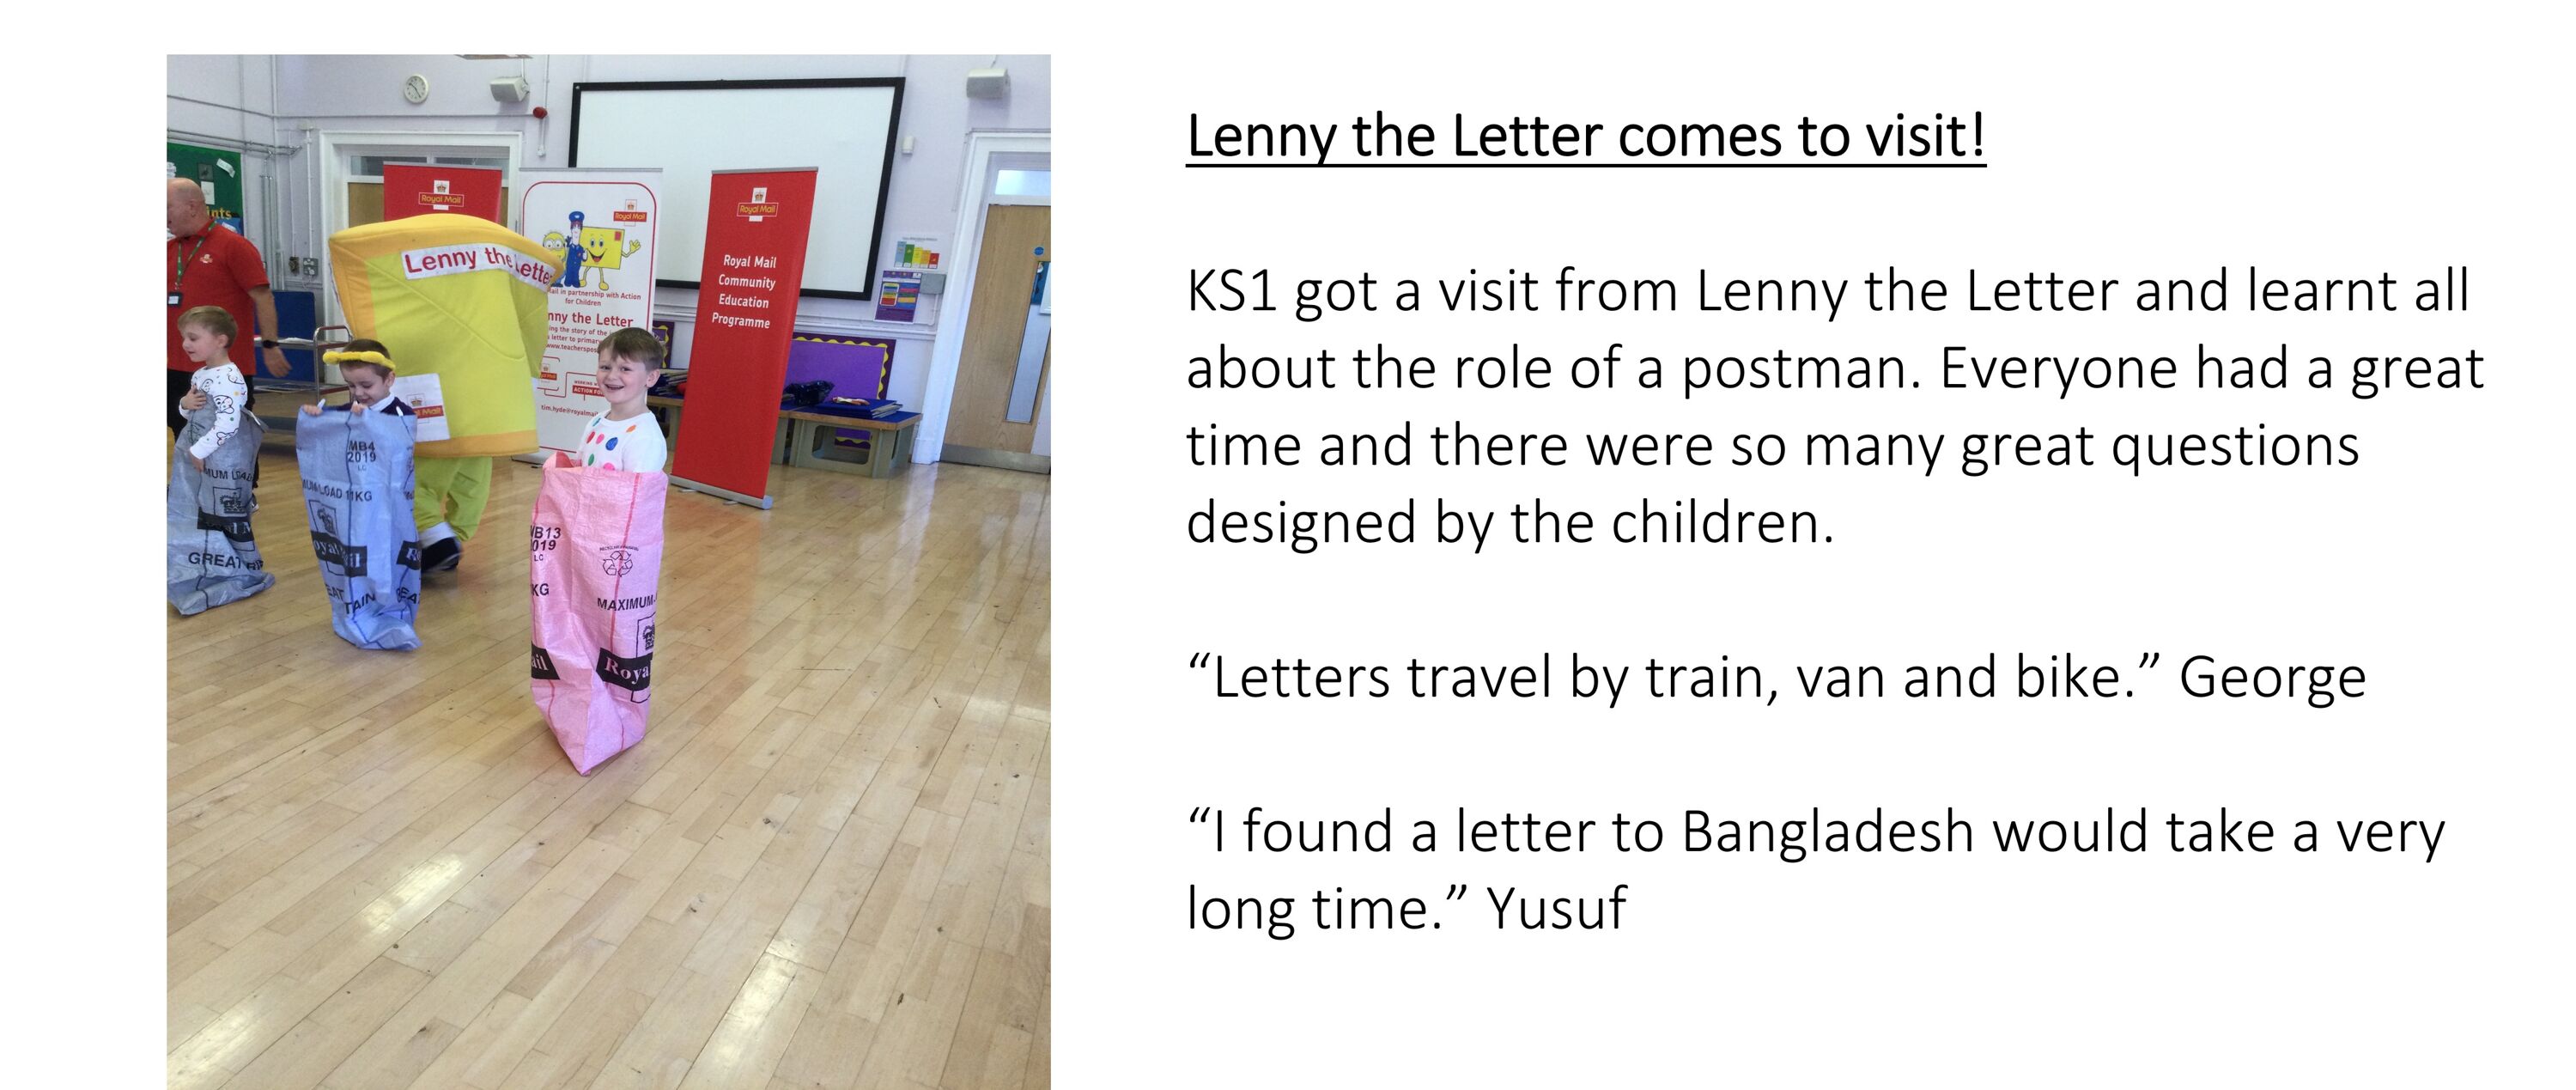 Lenny the Letter